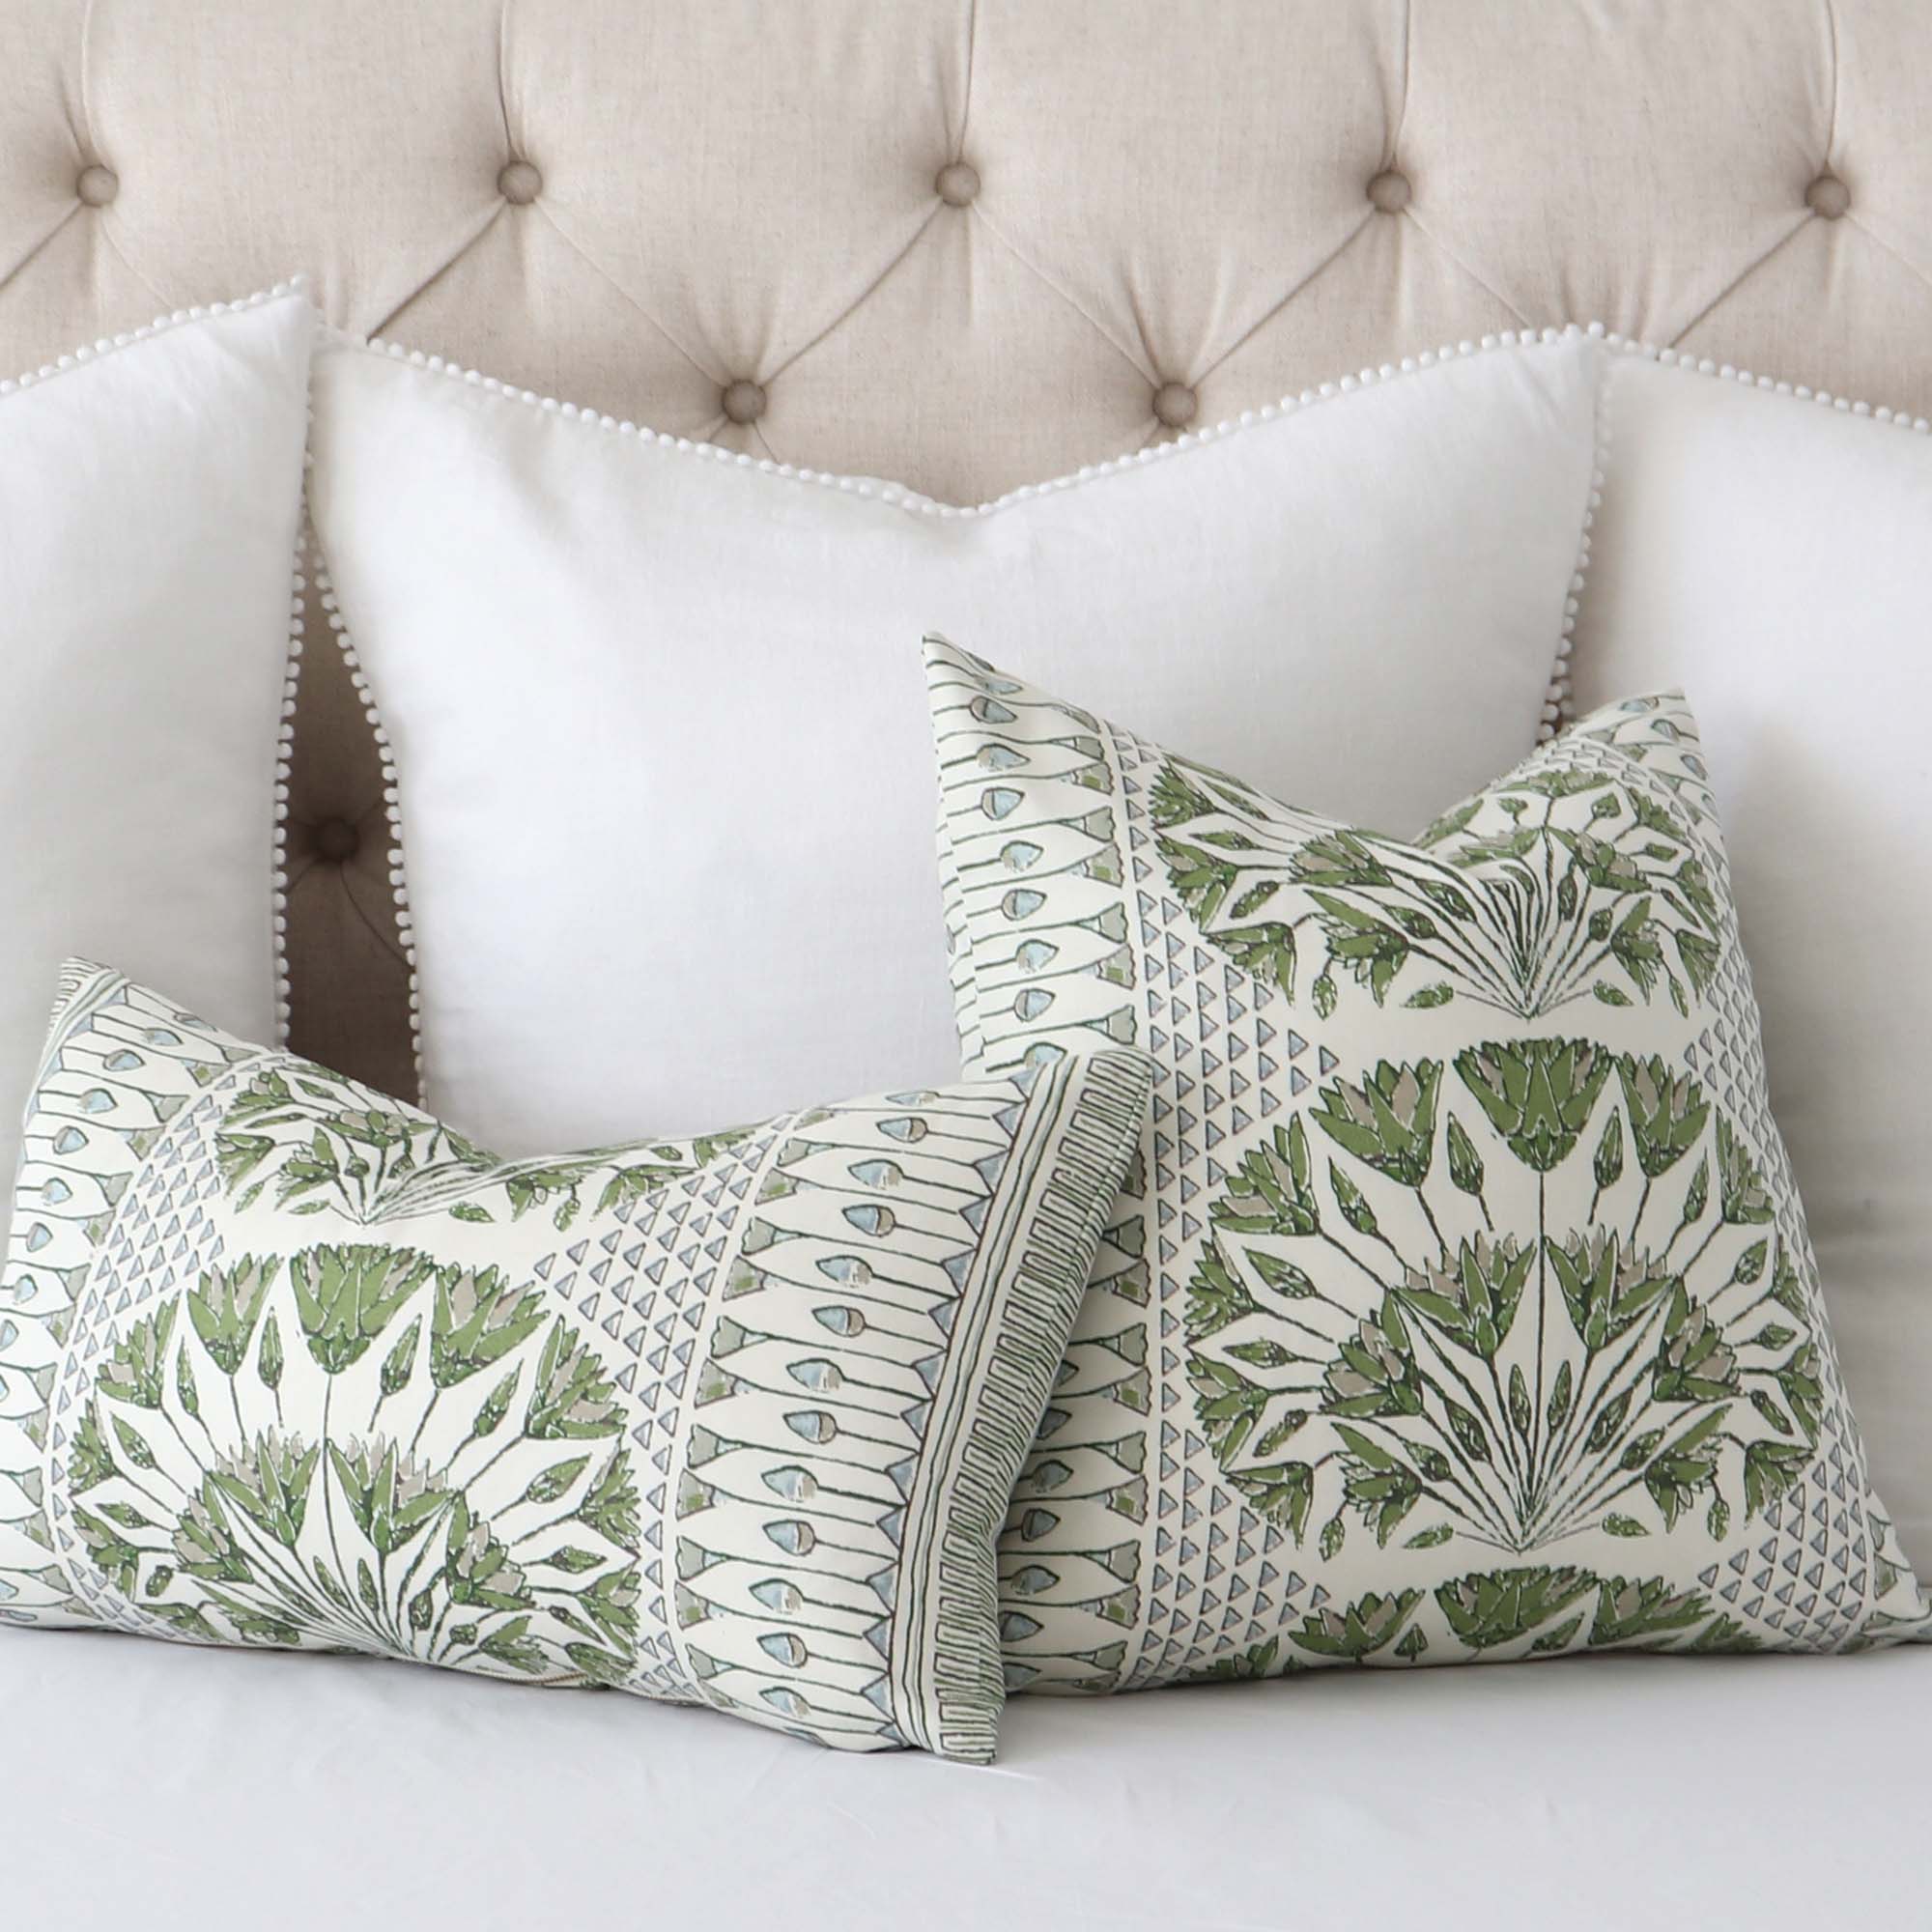 Thibaut Anna French Cairo Floral Green White Designer Luxury Throw Pillow Cover with White Euro Sham Cases